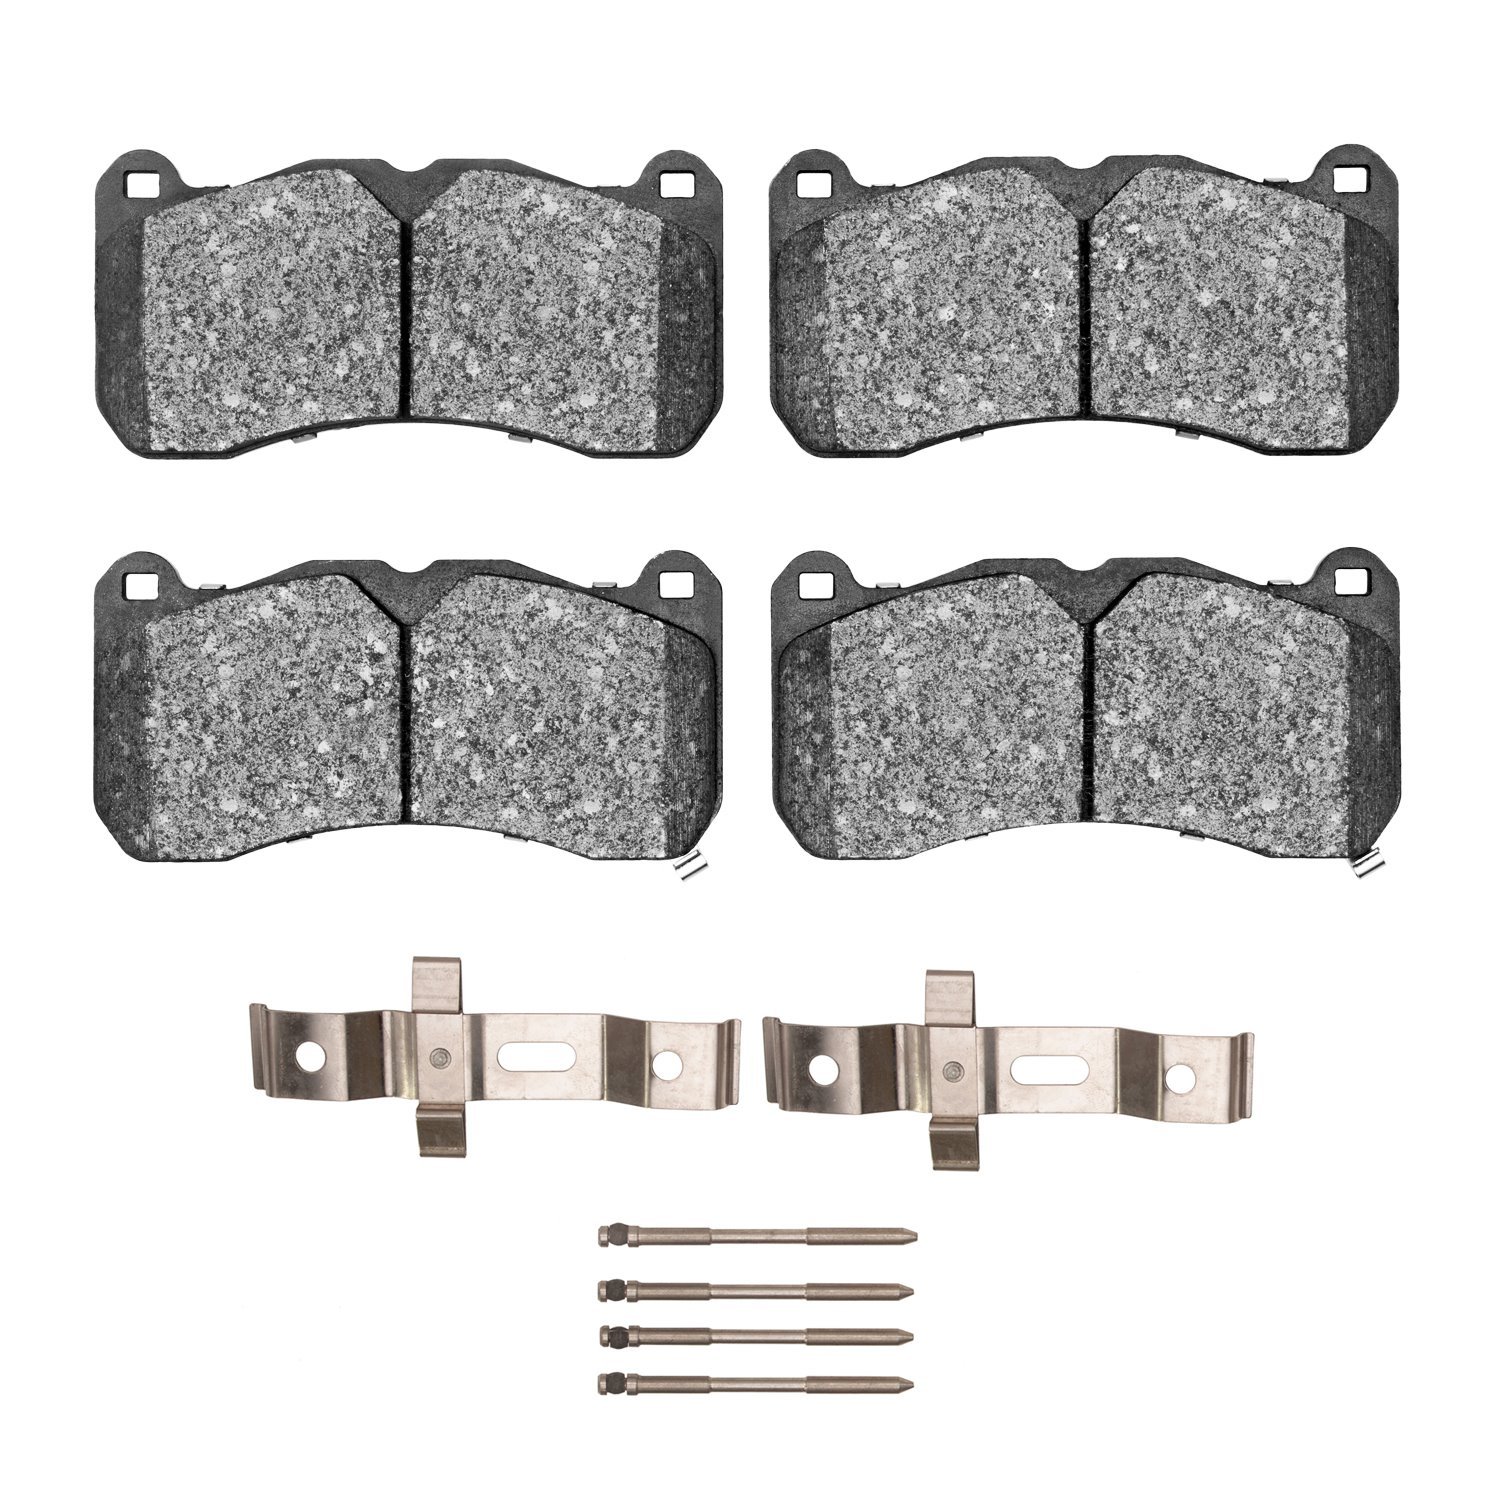 1310-1666-01 3000-Series Ceramic Brake Pads & Hardware Kit, 2013-2014 Ford/Lincoln/Mercury/Mazda, Position: Front